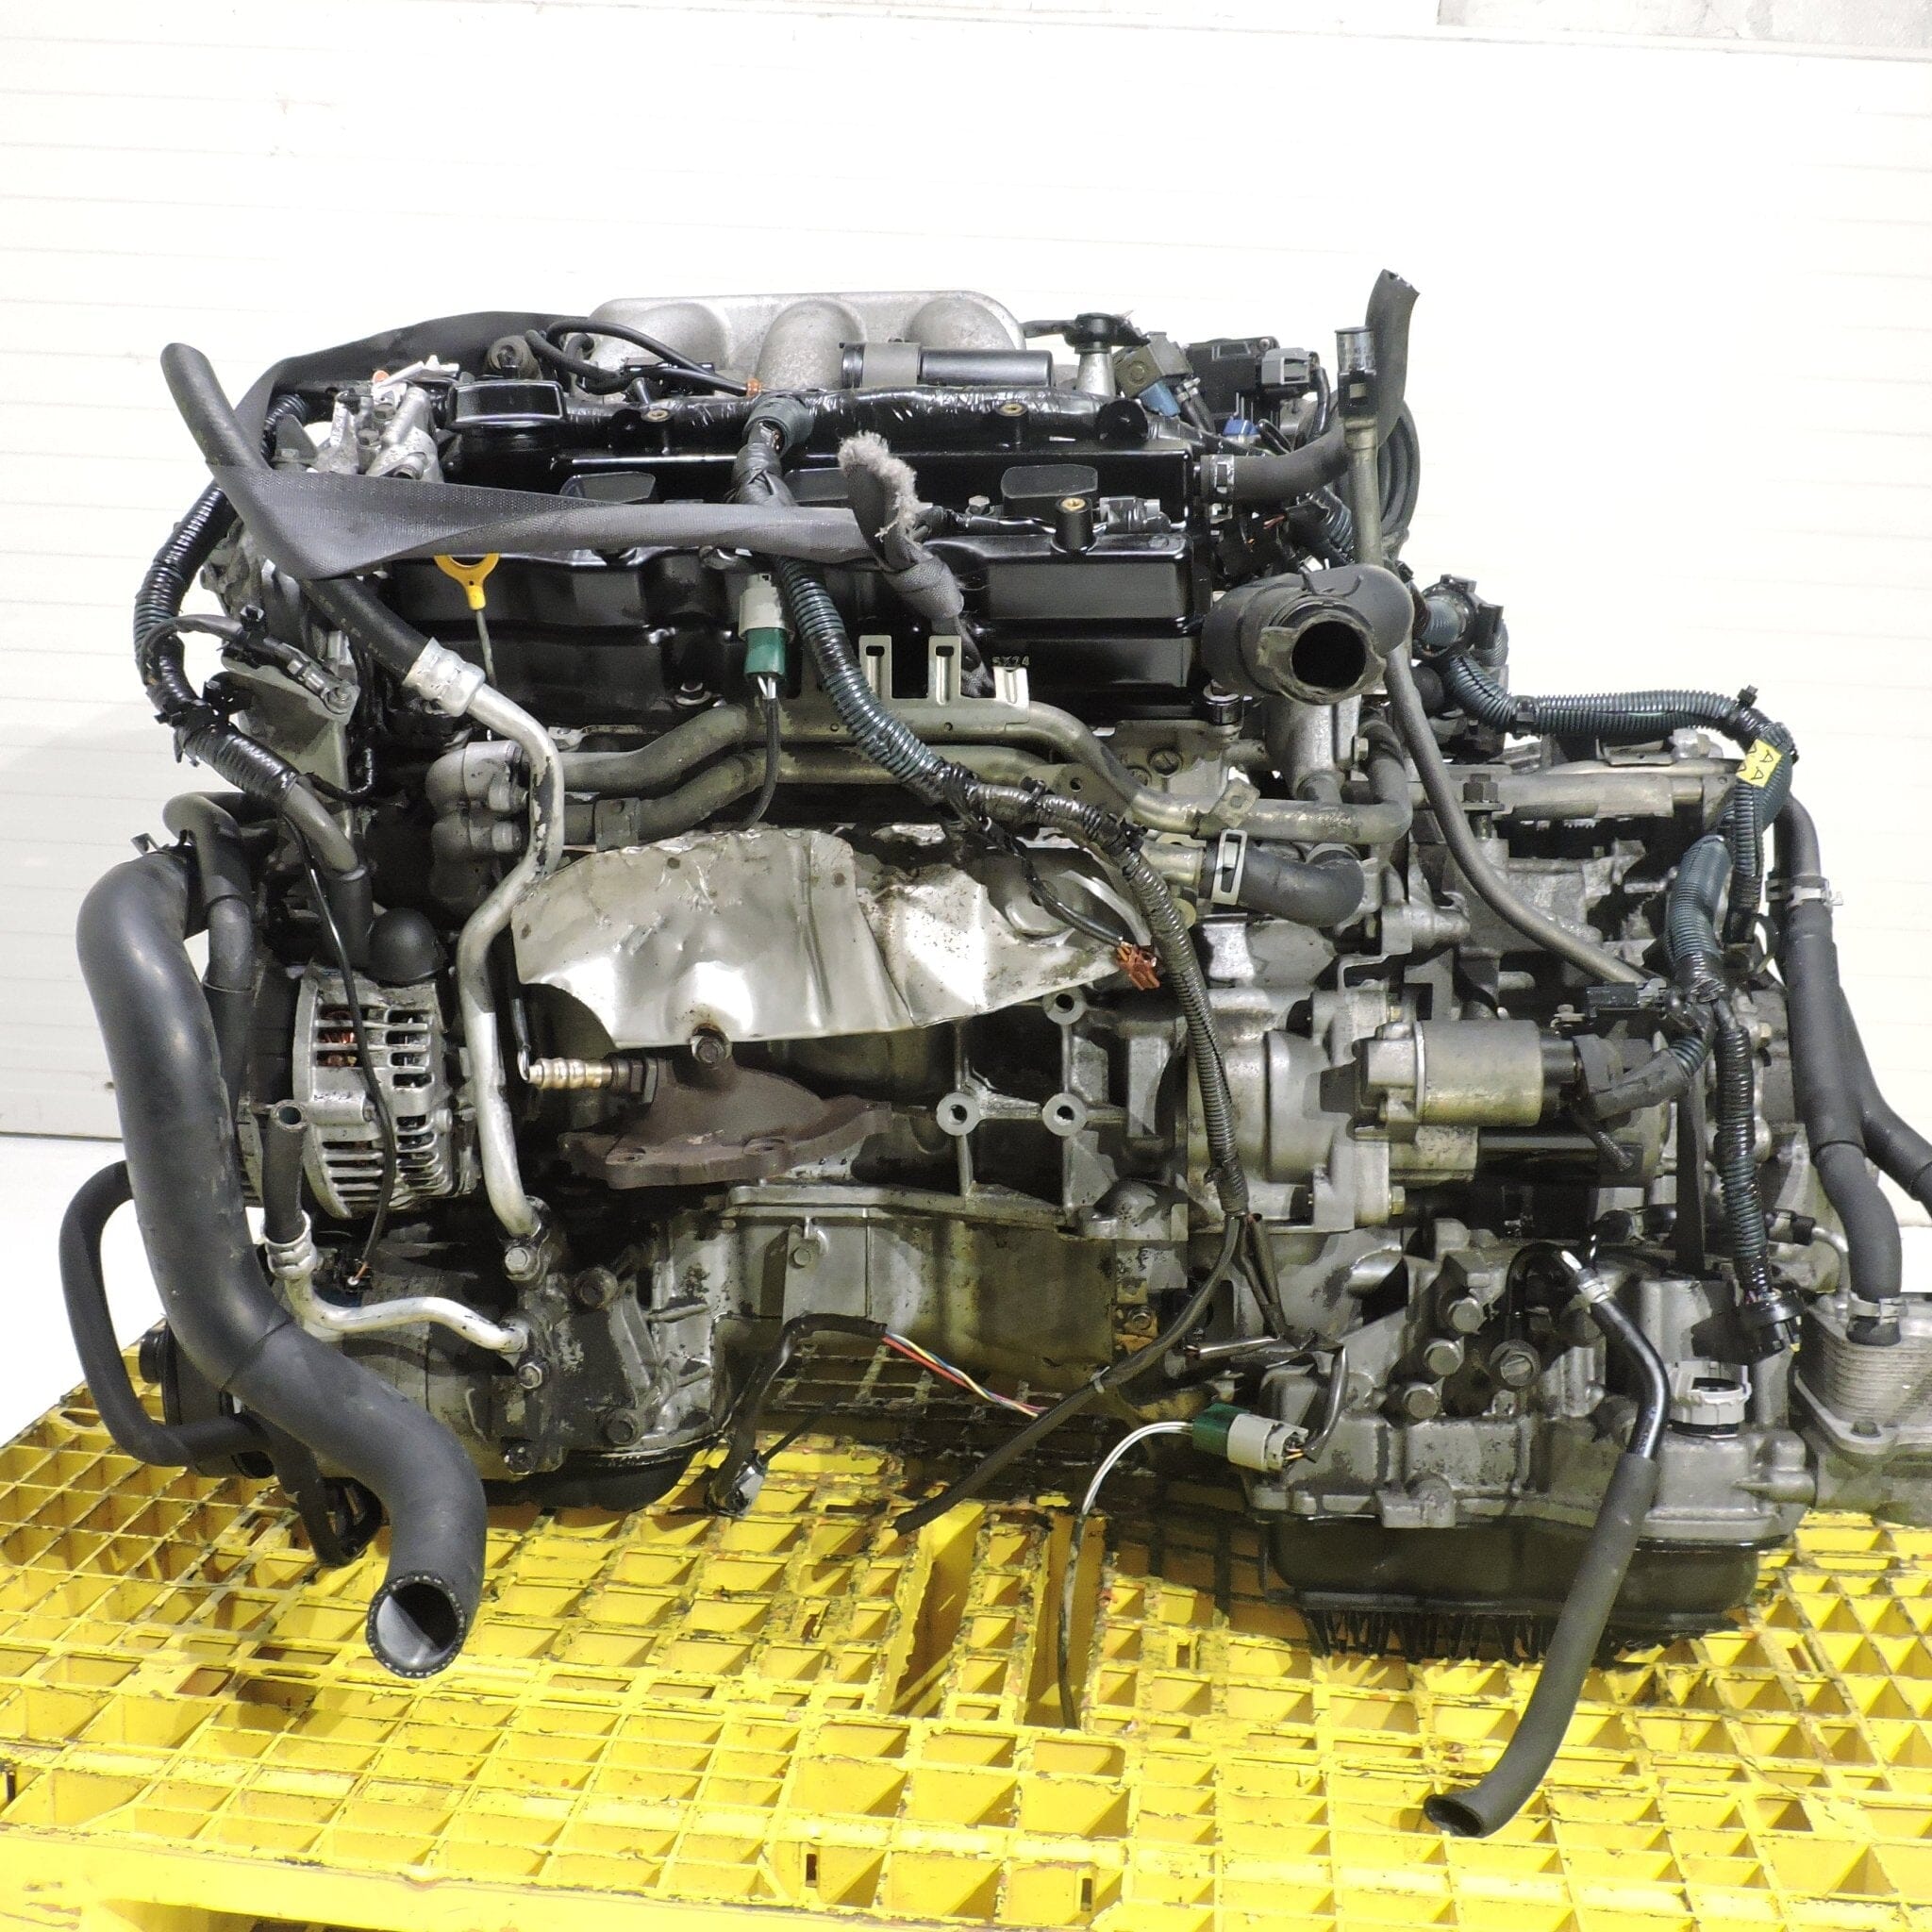 Nissan Maxima 2003-2004 3.5l V6 Jdm Engine - VQ35DE